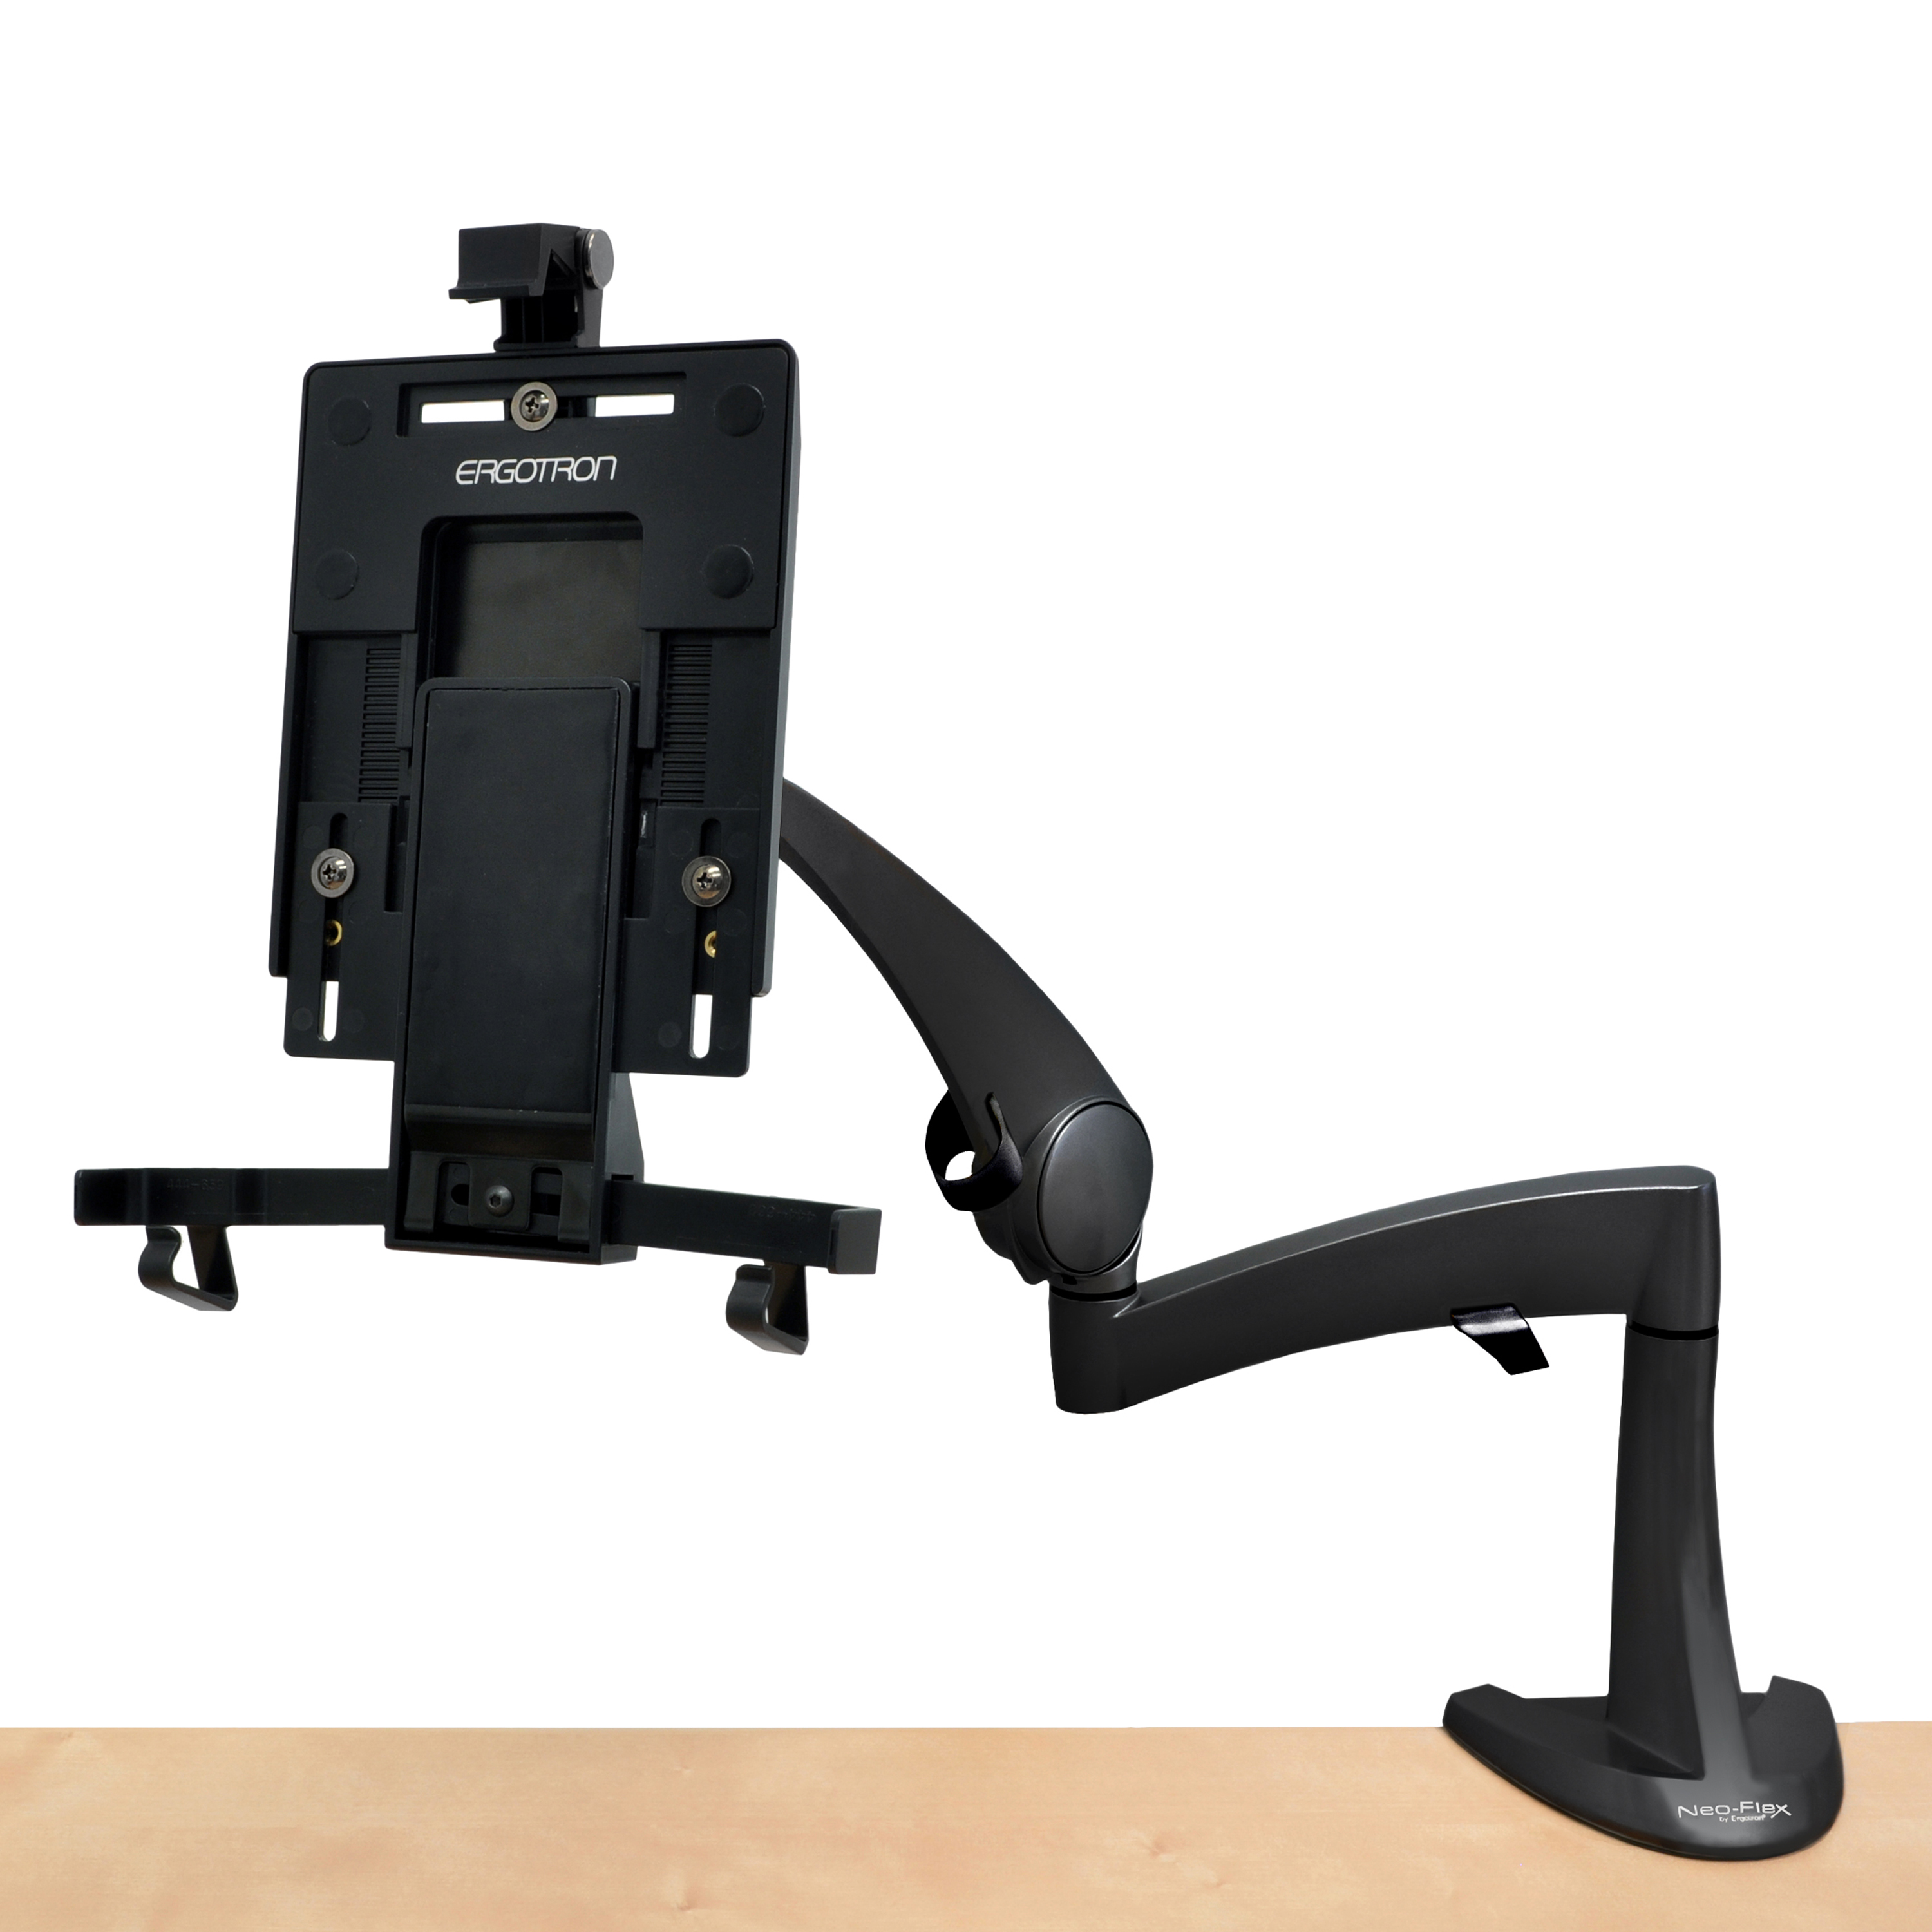 Stand Comptoir à Bras Flexible - iPad 10.2 - Noir